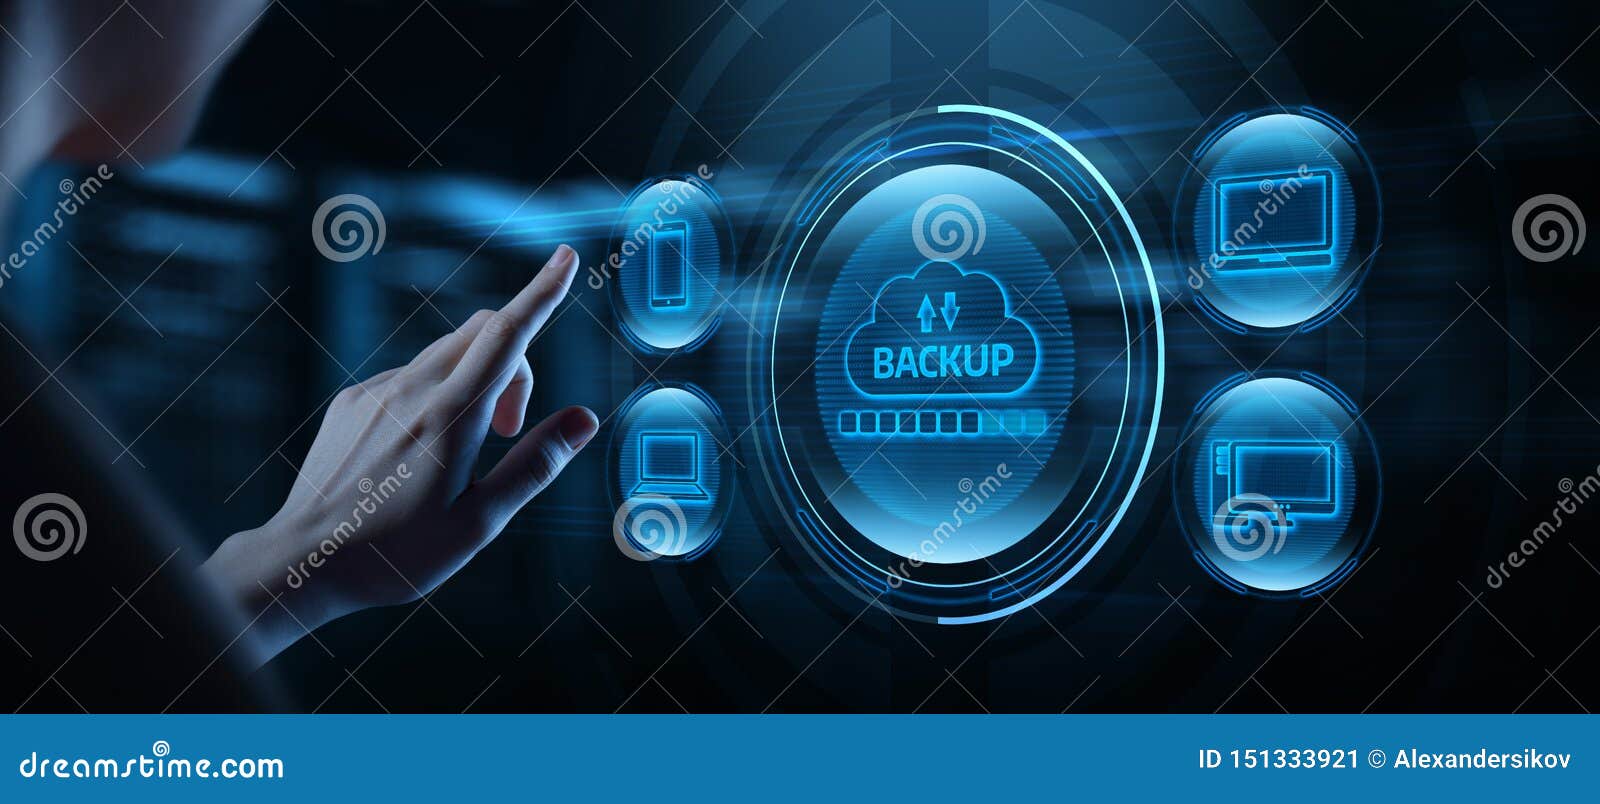 backup storage data internet technology business concept